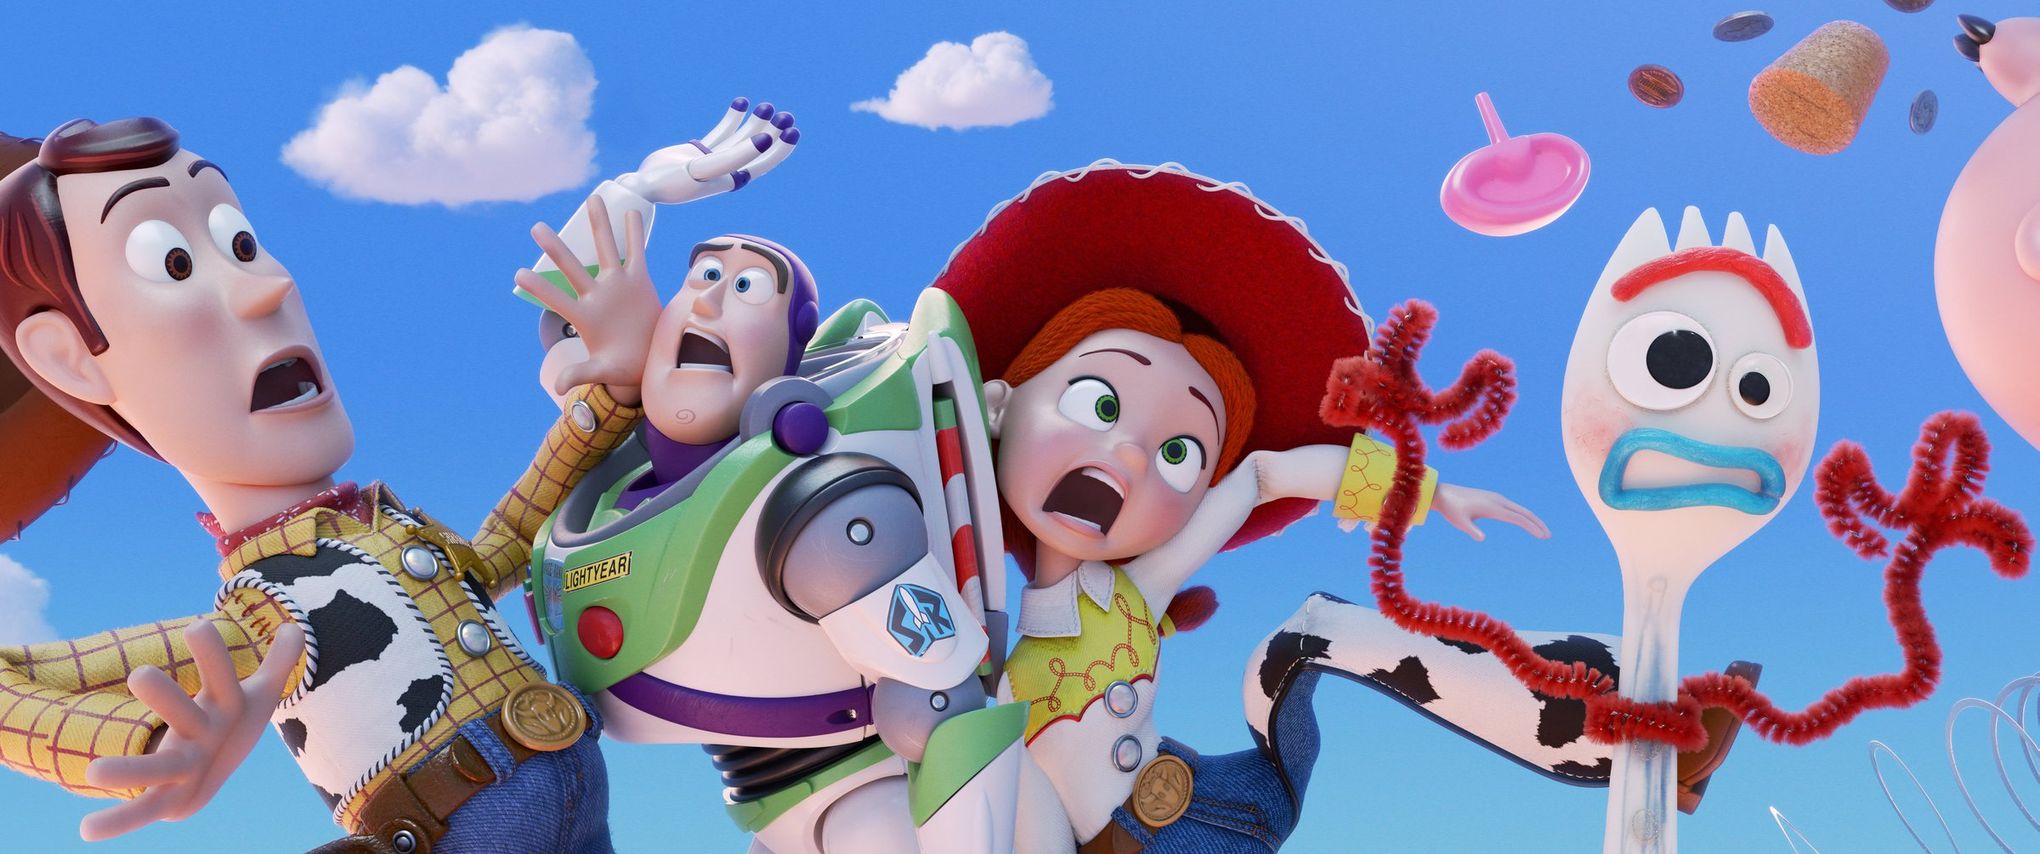 Disney-Pixar Toy Story: A Magical Tale